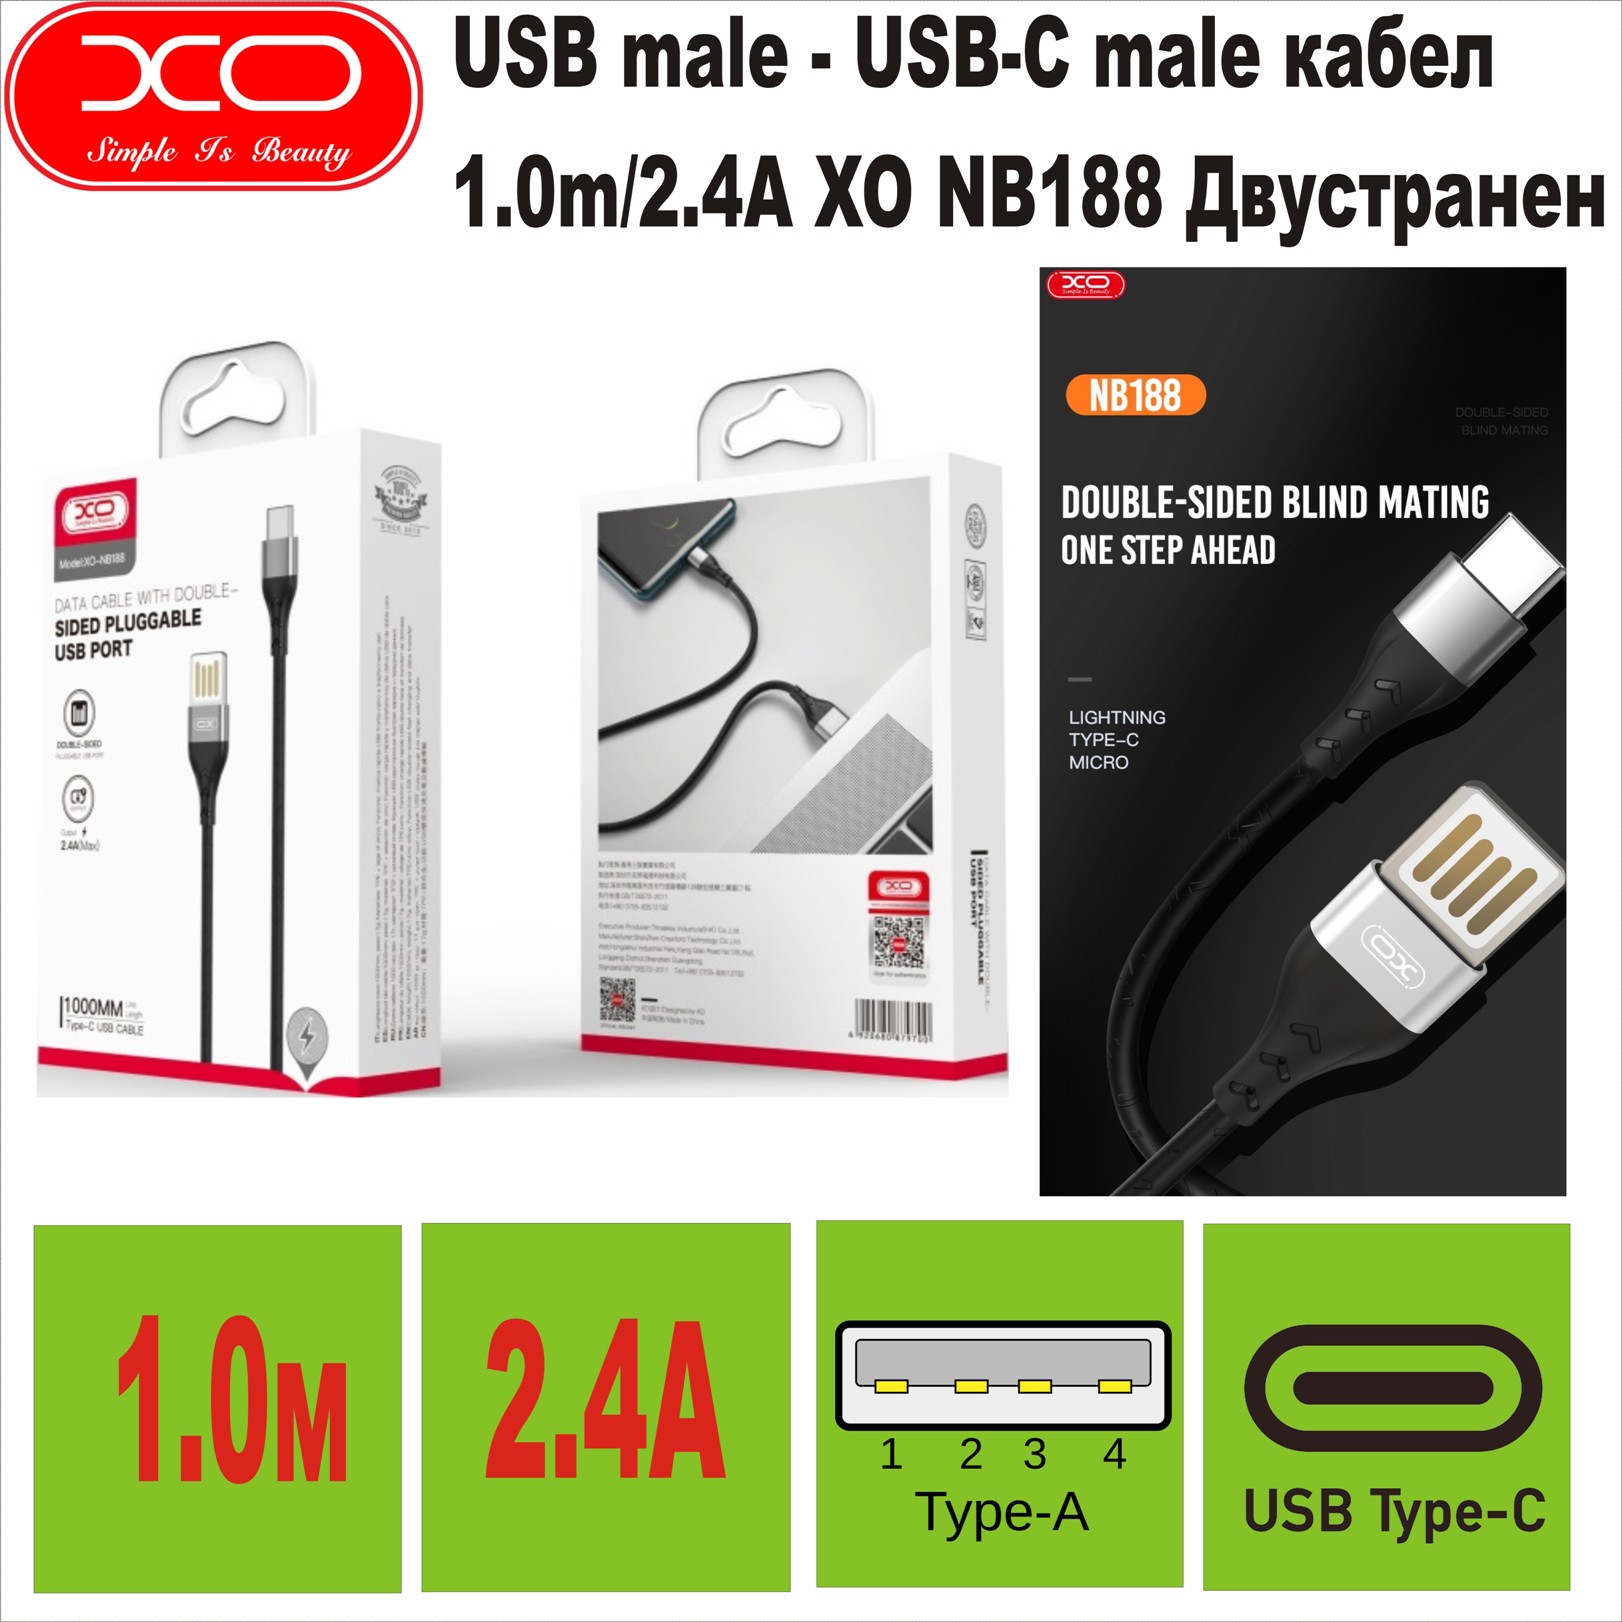 USB male - USB-C male 1.0m/2.4A XO NB188